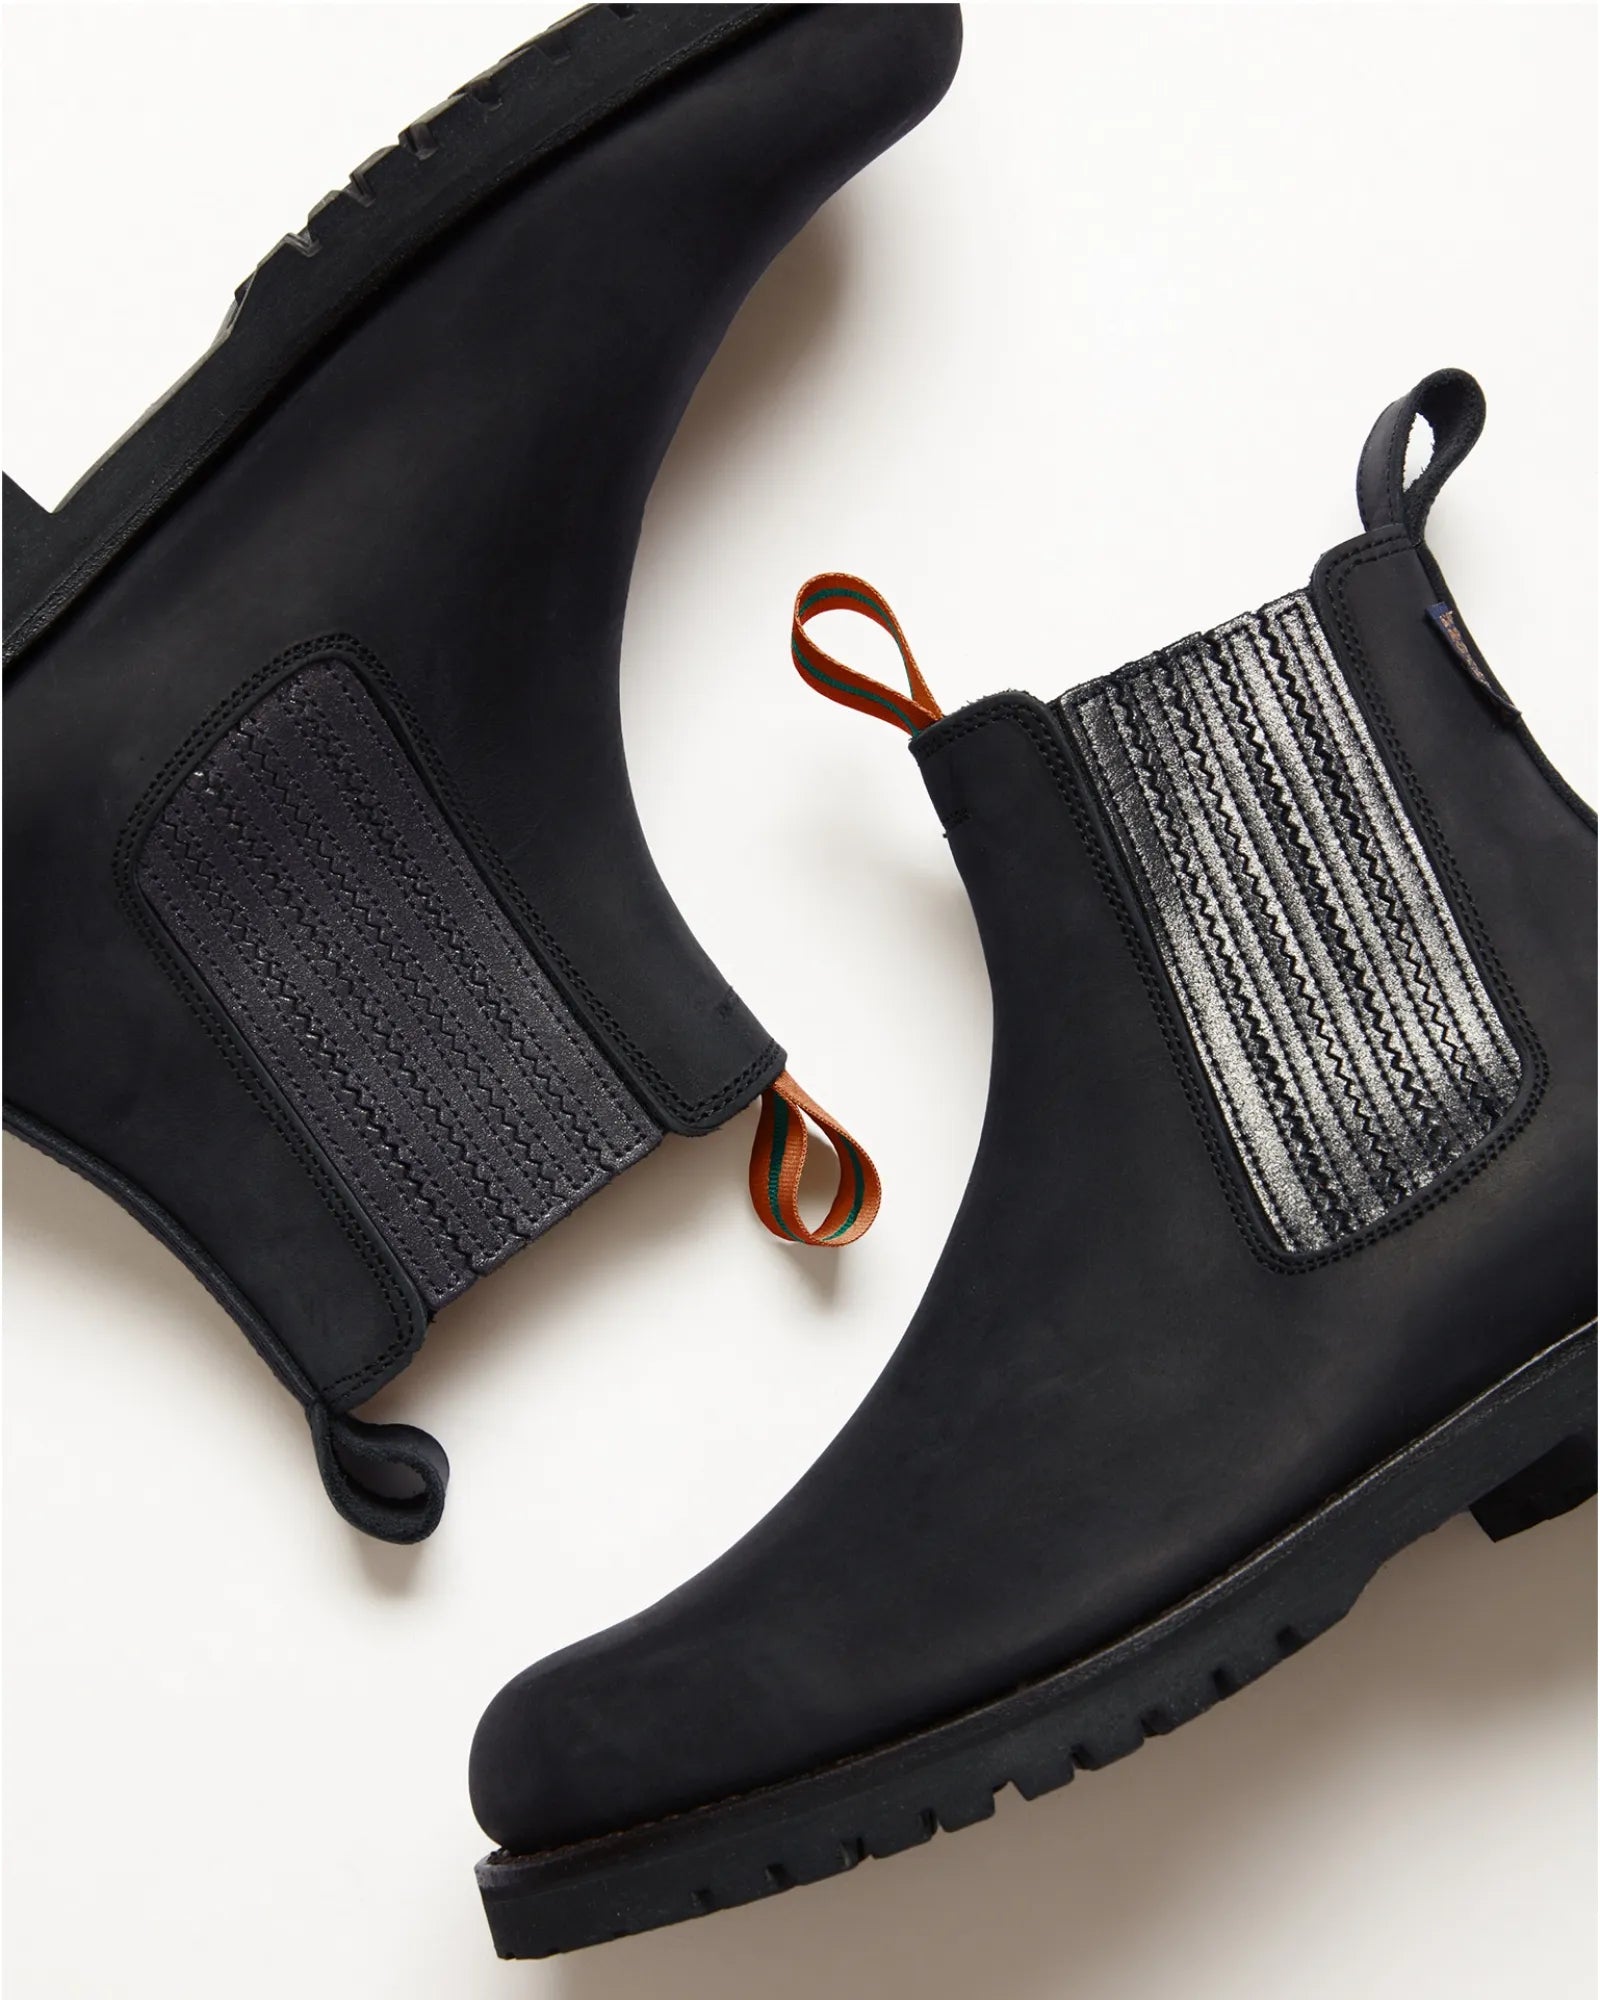 Oscar Leather Boot - Black/Gunmetal